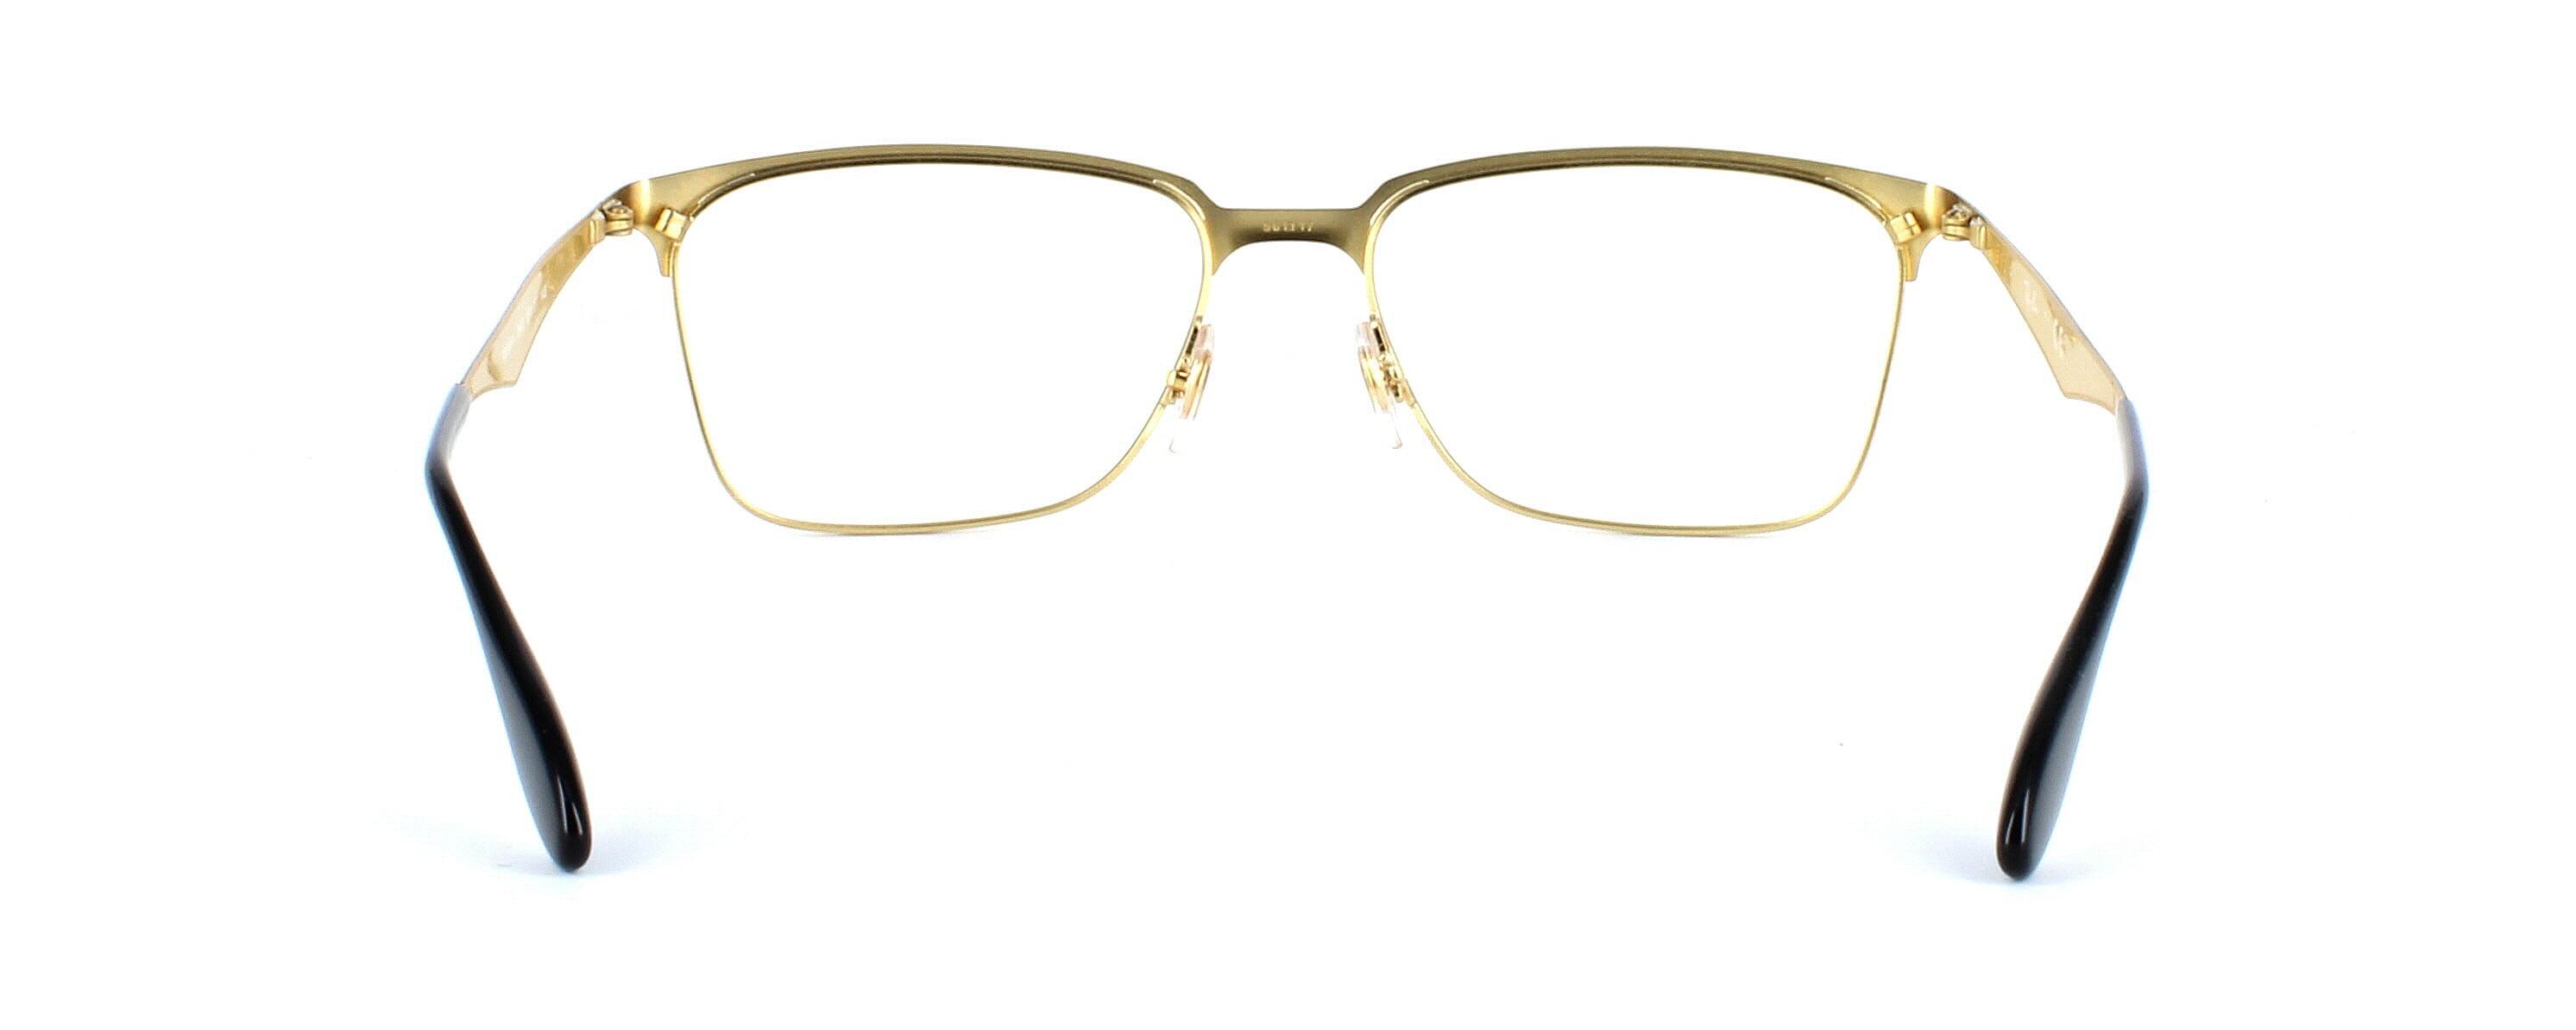 Ray Ban 6344 Black & Gold - Unisex 2-tone metal glasses frame - image view 4